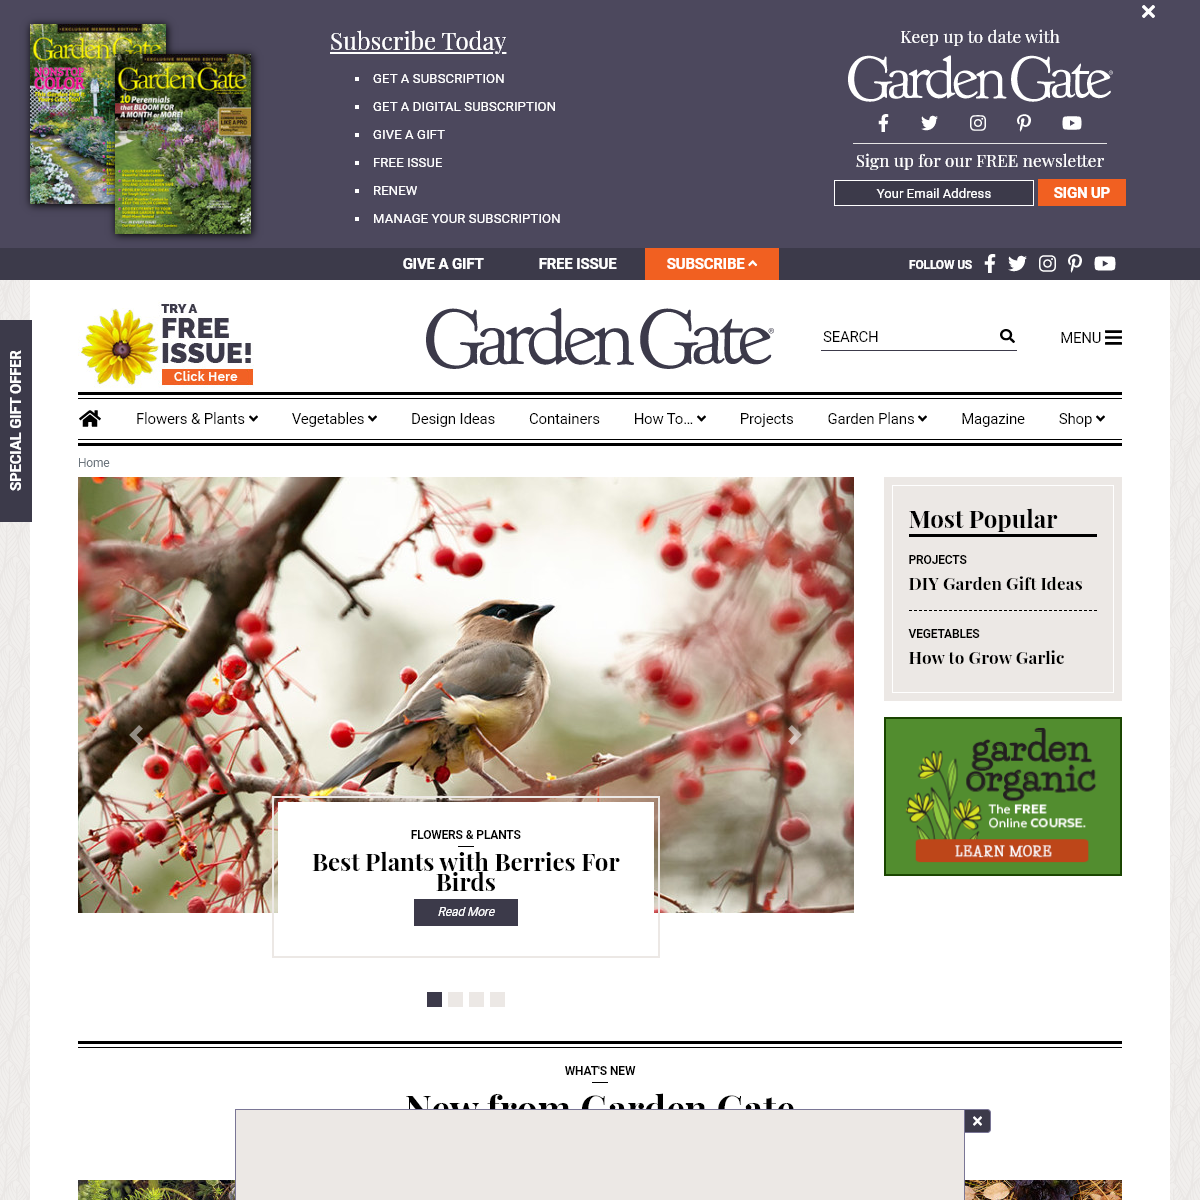 A complete backup of gardengatemagazine.com